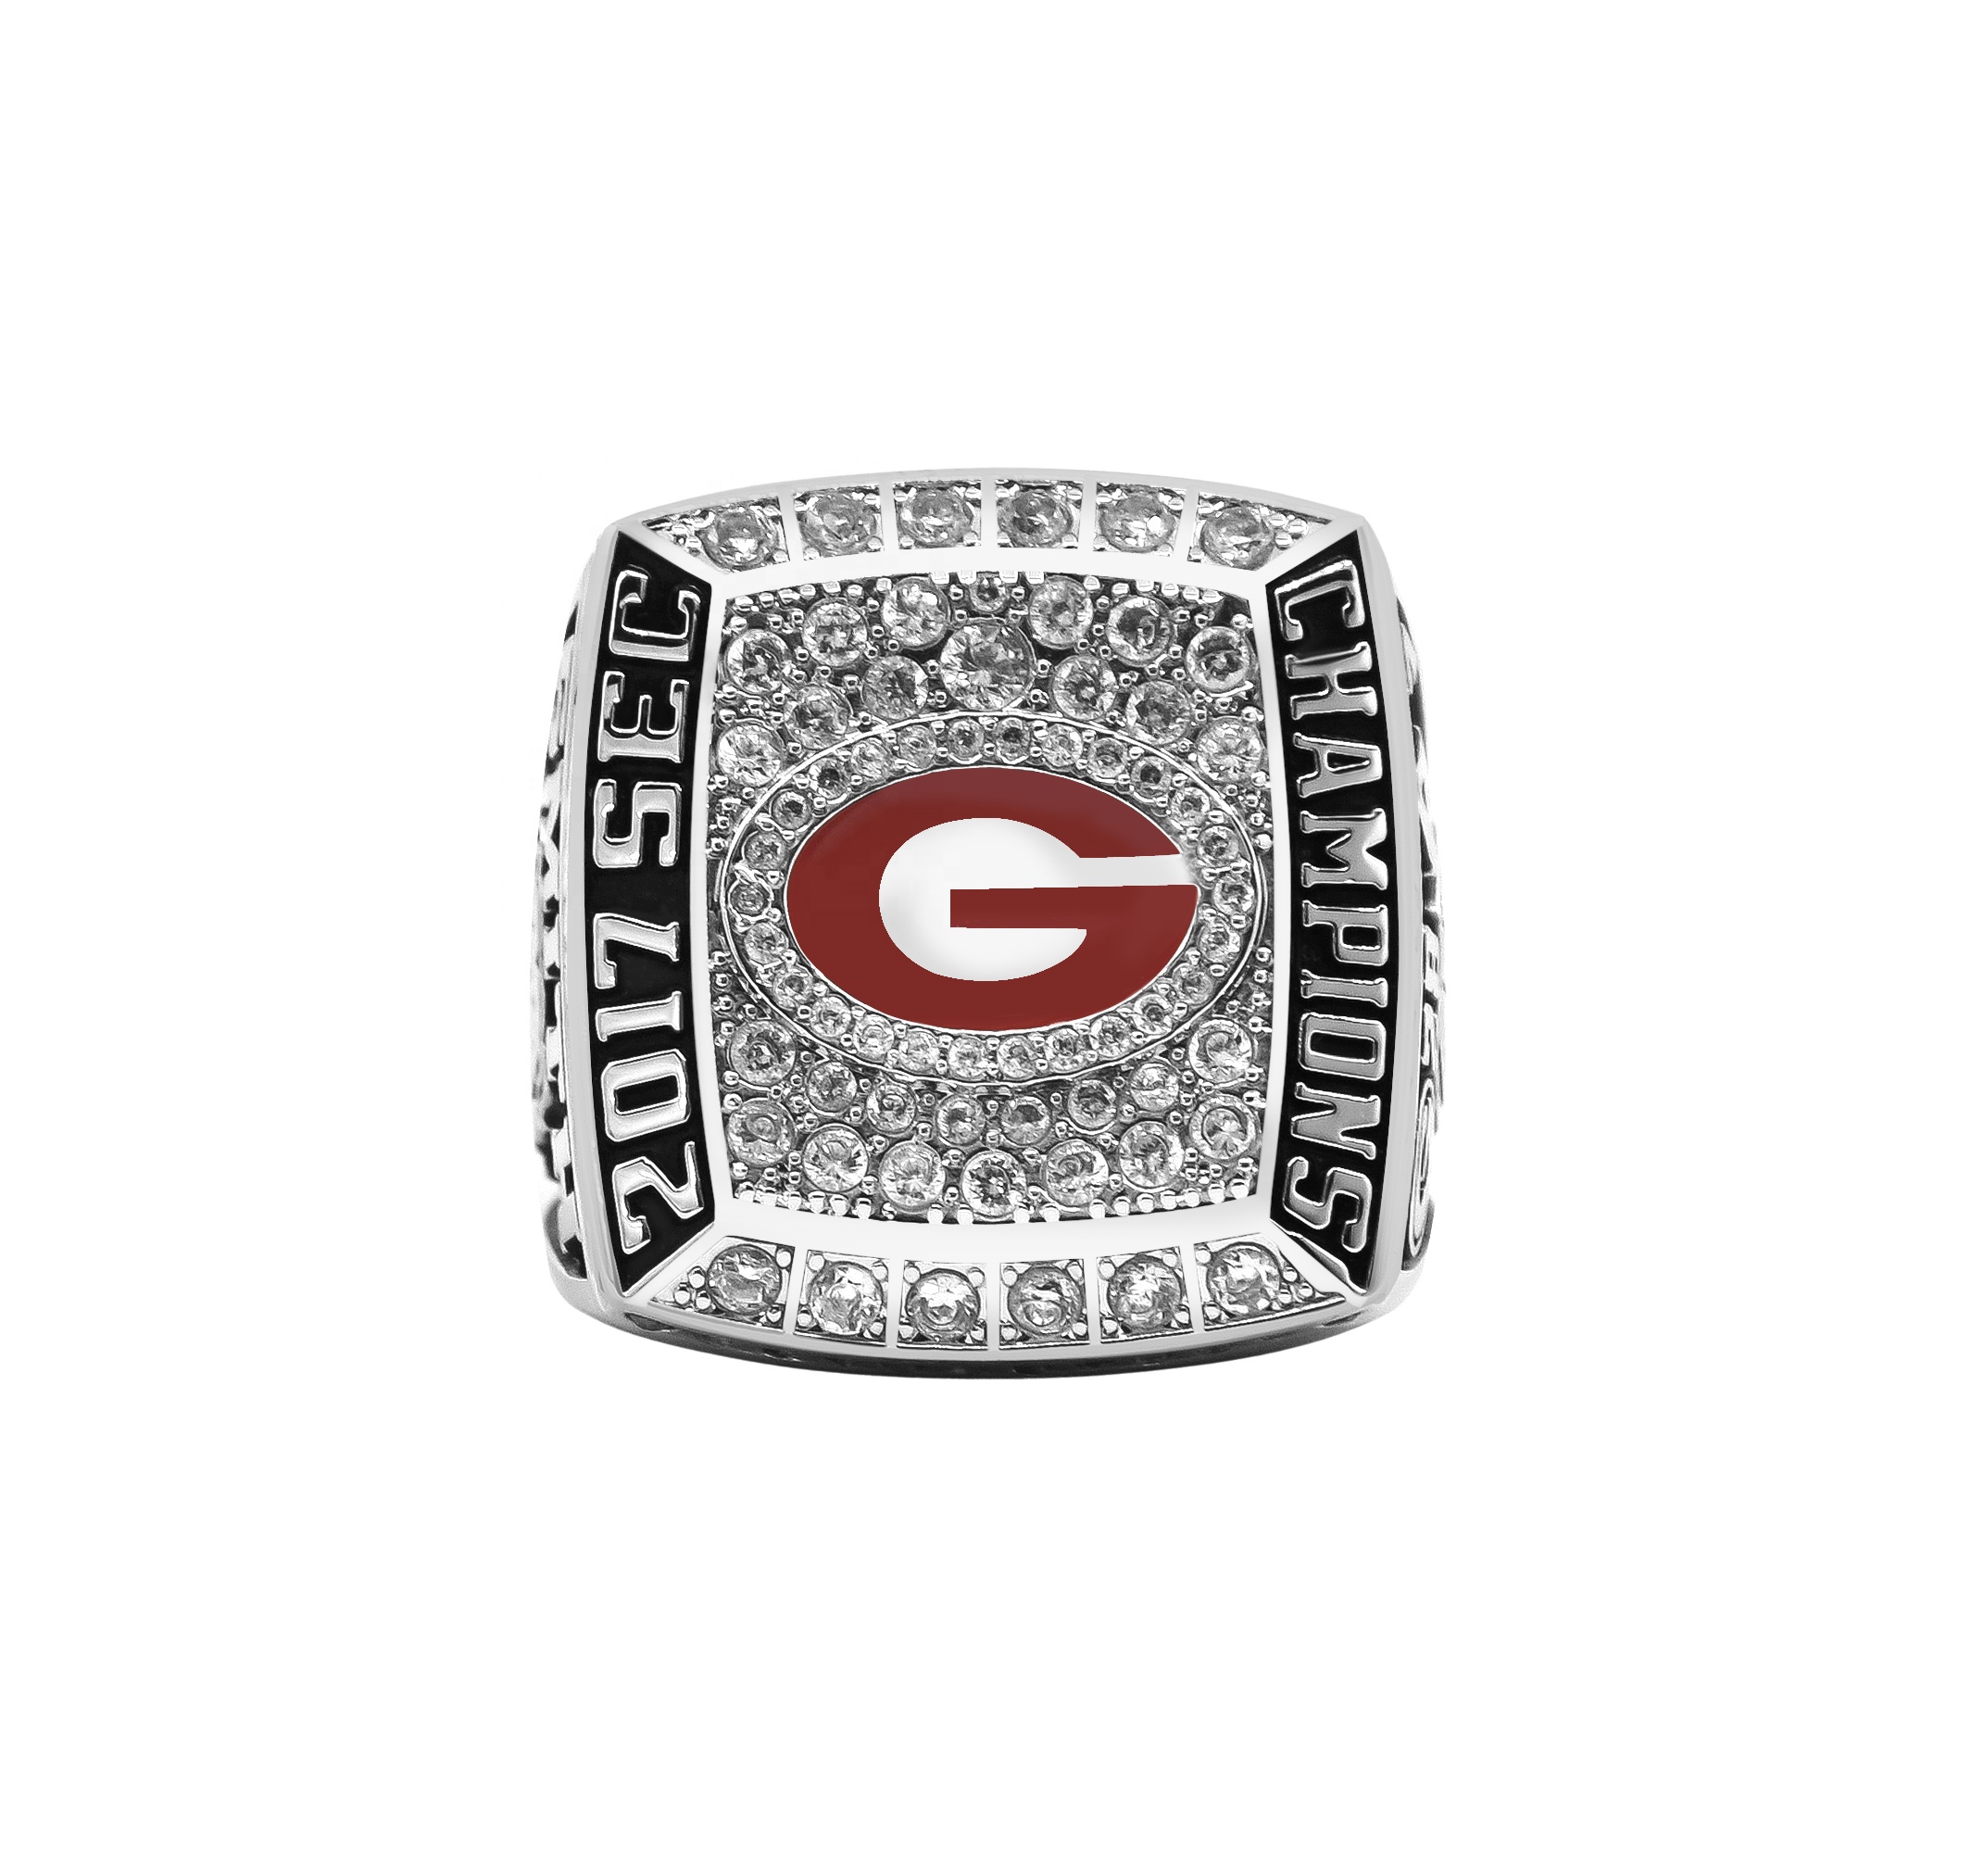 2017 2018 Georgia Bulldogs SEC National Championship ring